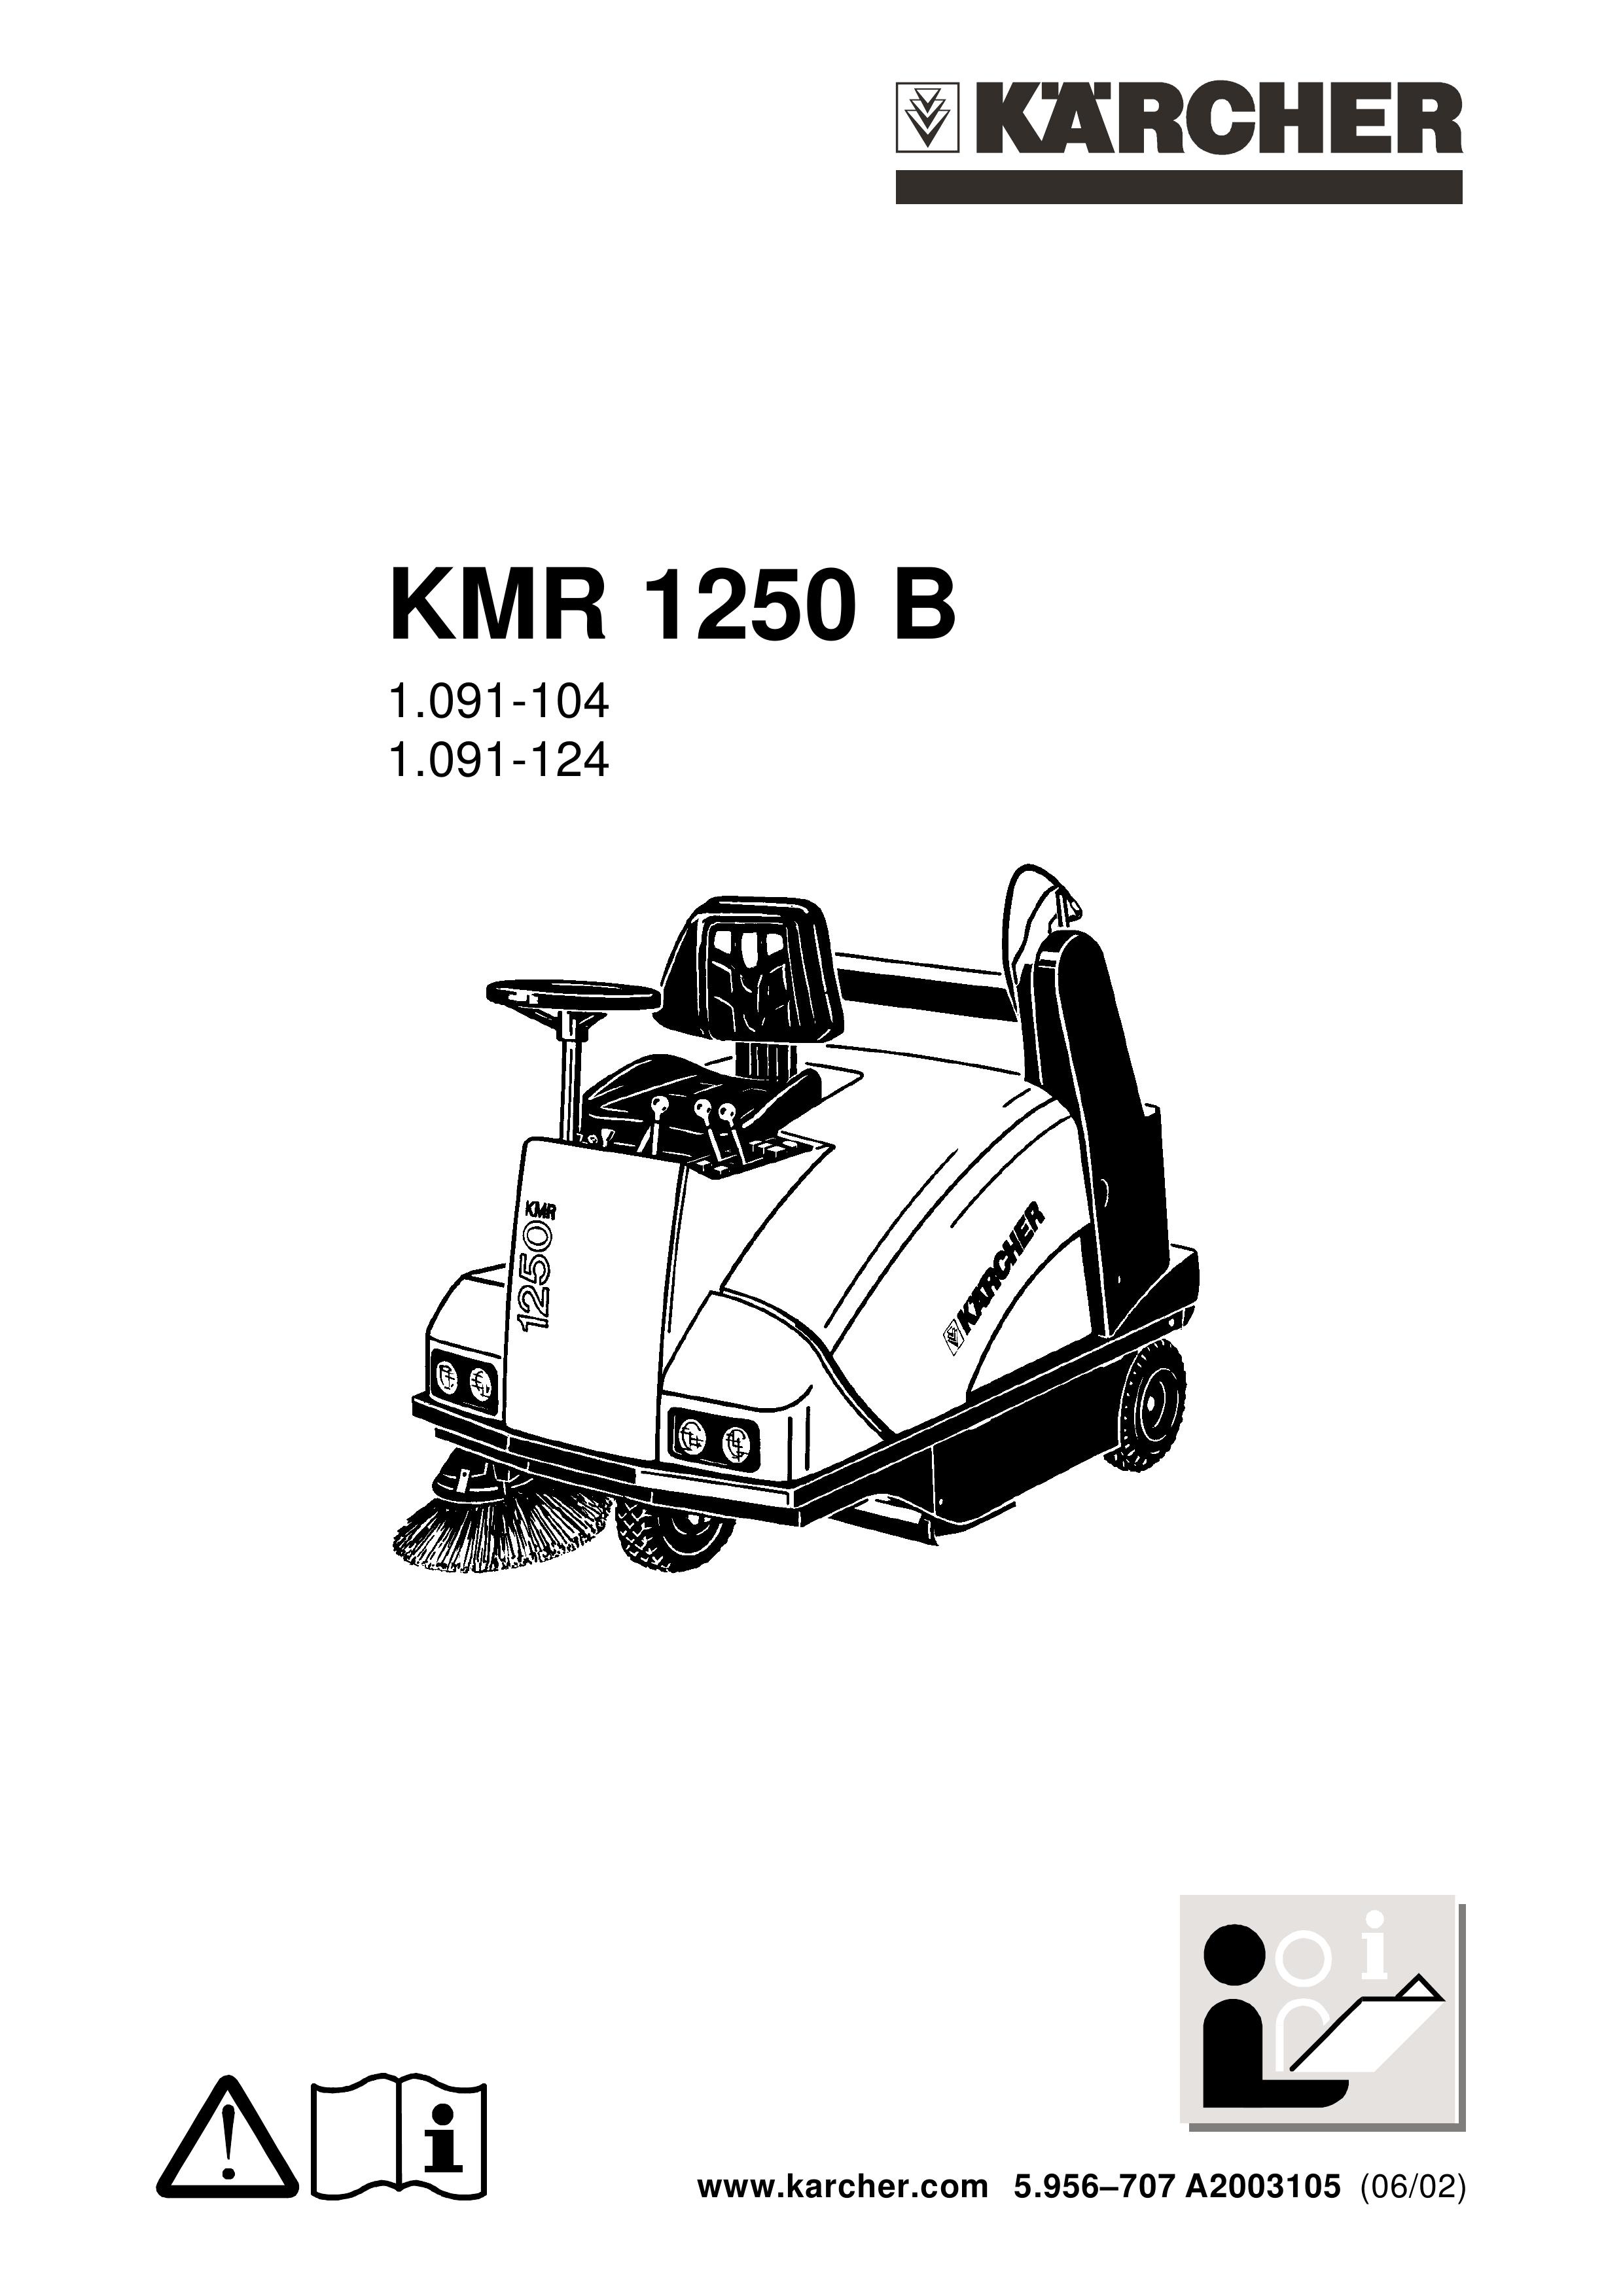 Karcher KMR 1250 B Lawn Sweeper User Manual